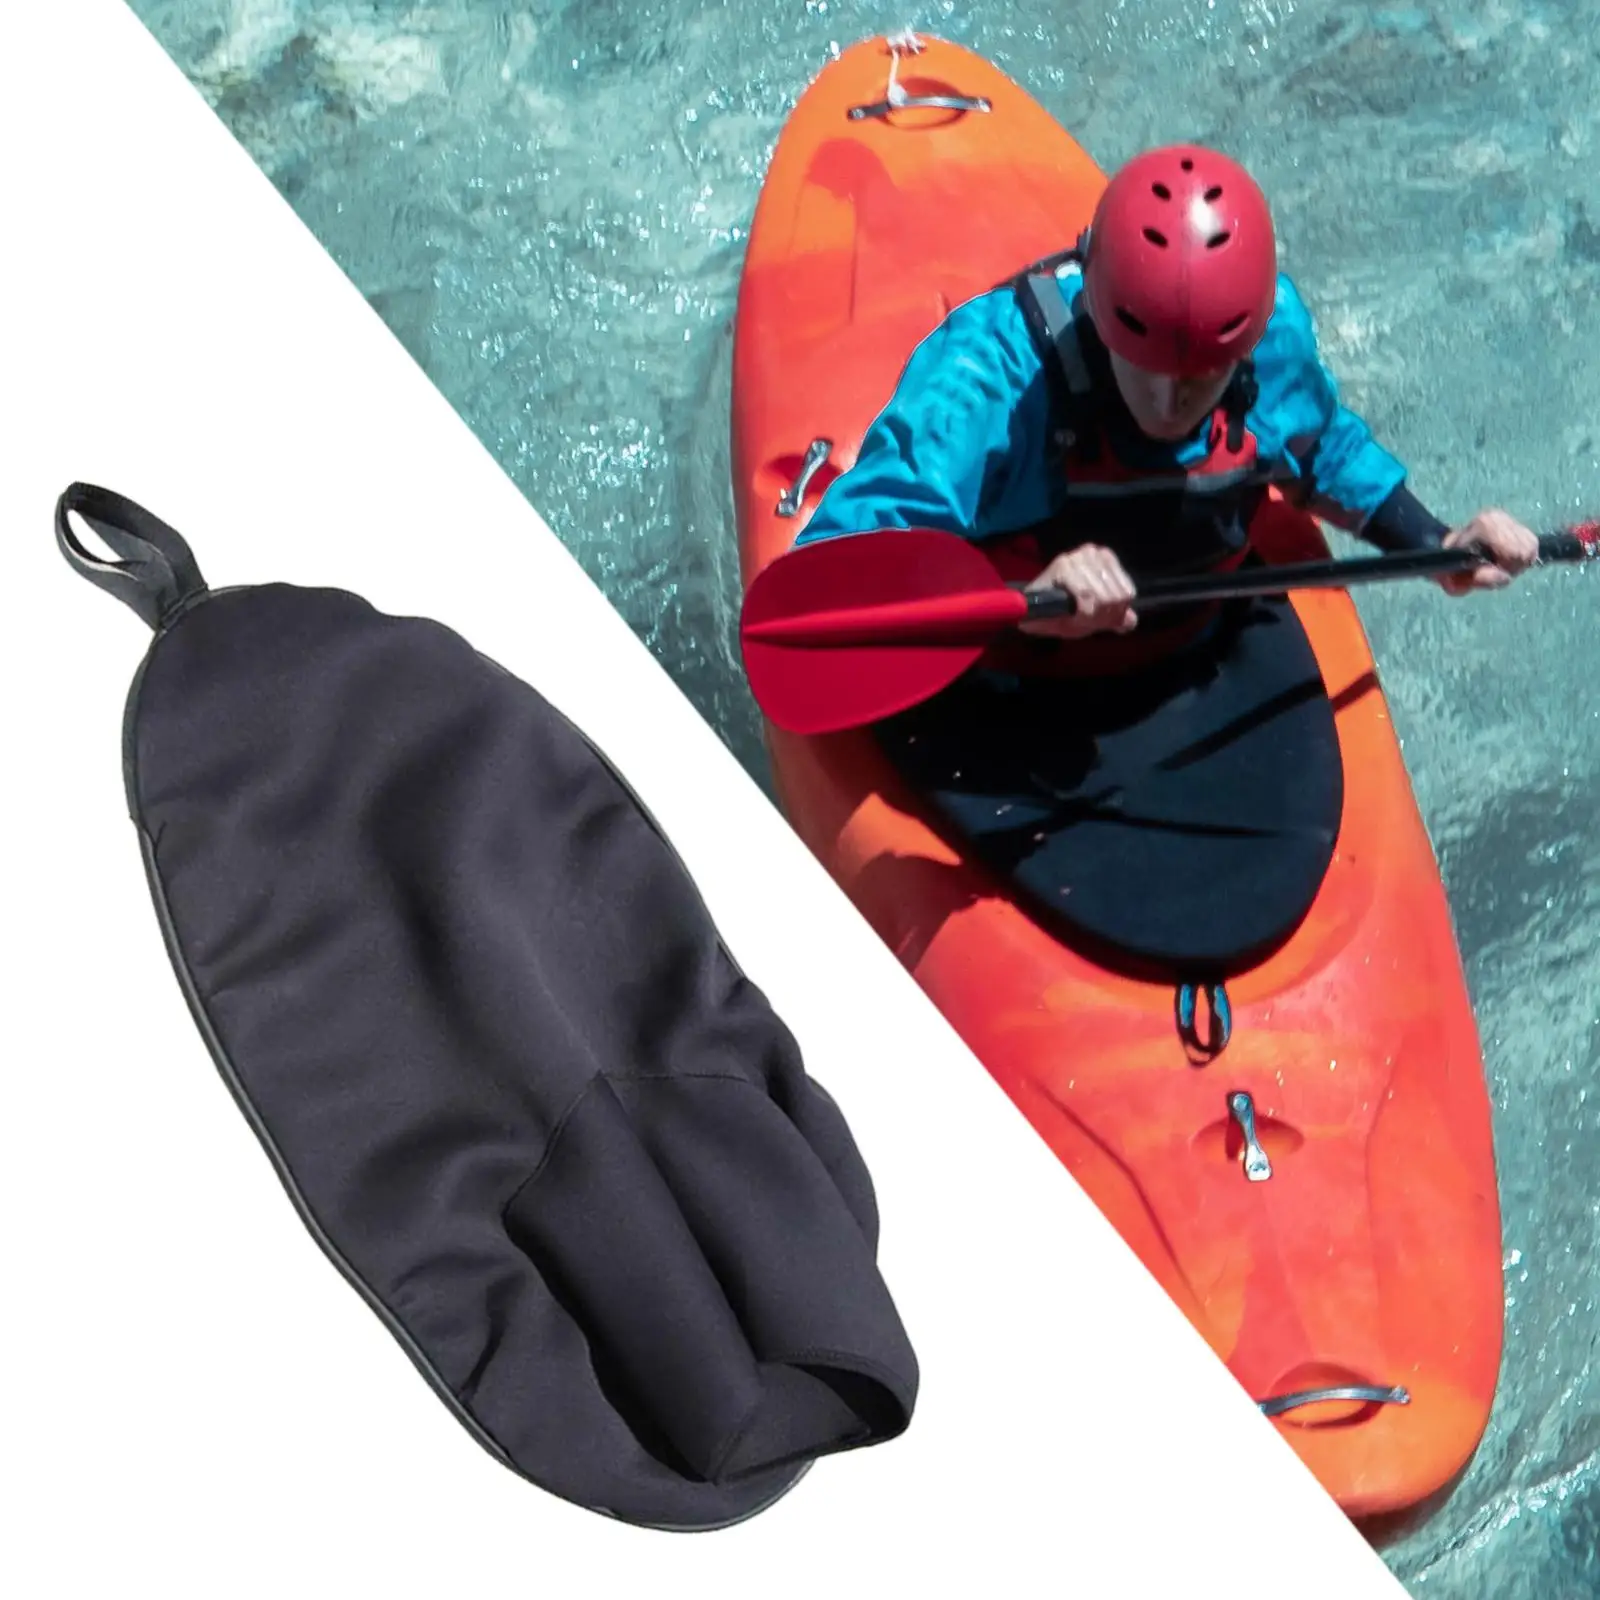 Universal Kayak Spray Skirt Length 39.4inch Neoprene Waterproof Deck Sprayskirt Cover for Surfing Marine Rafting Kayaking